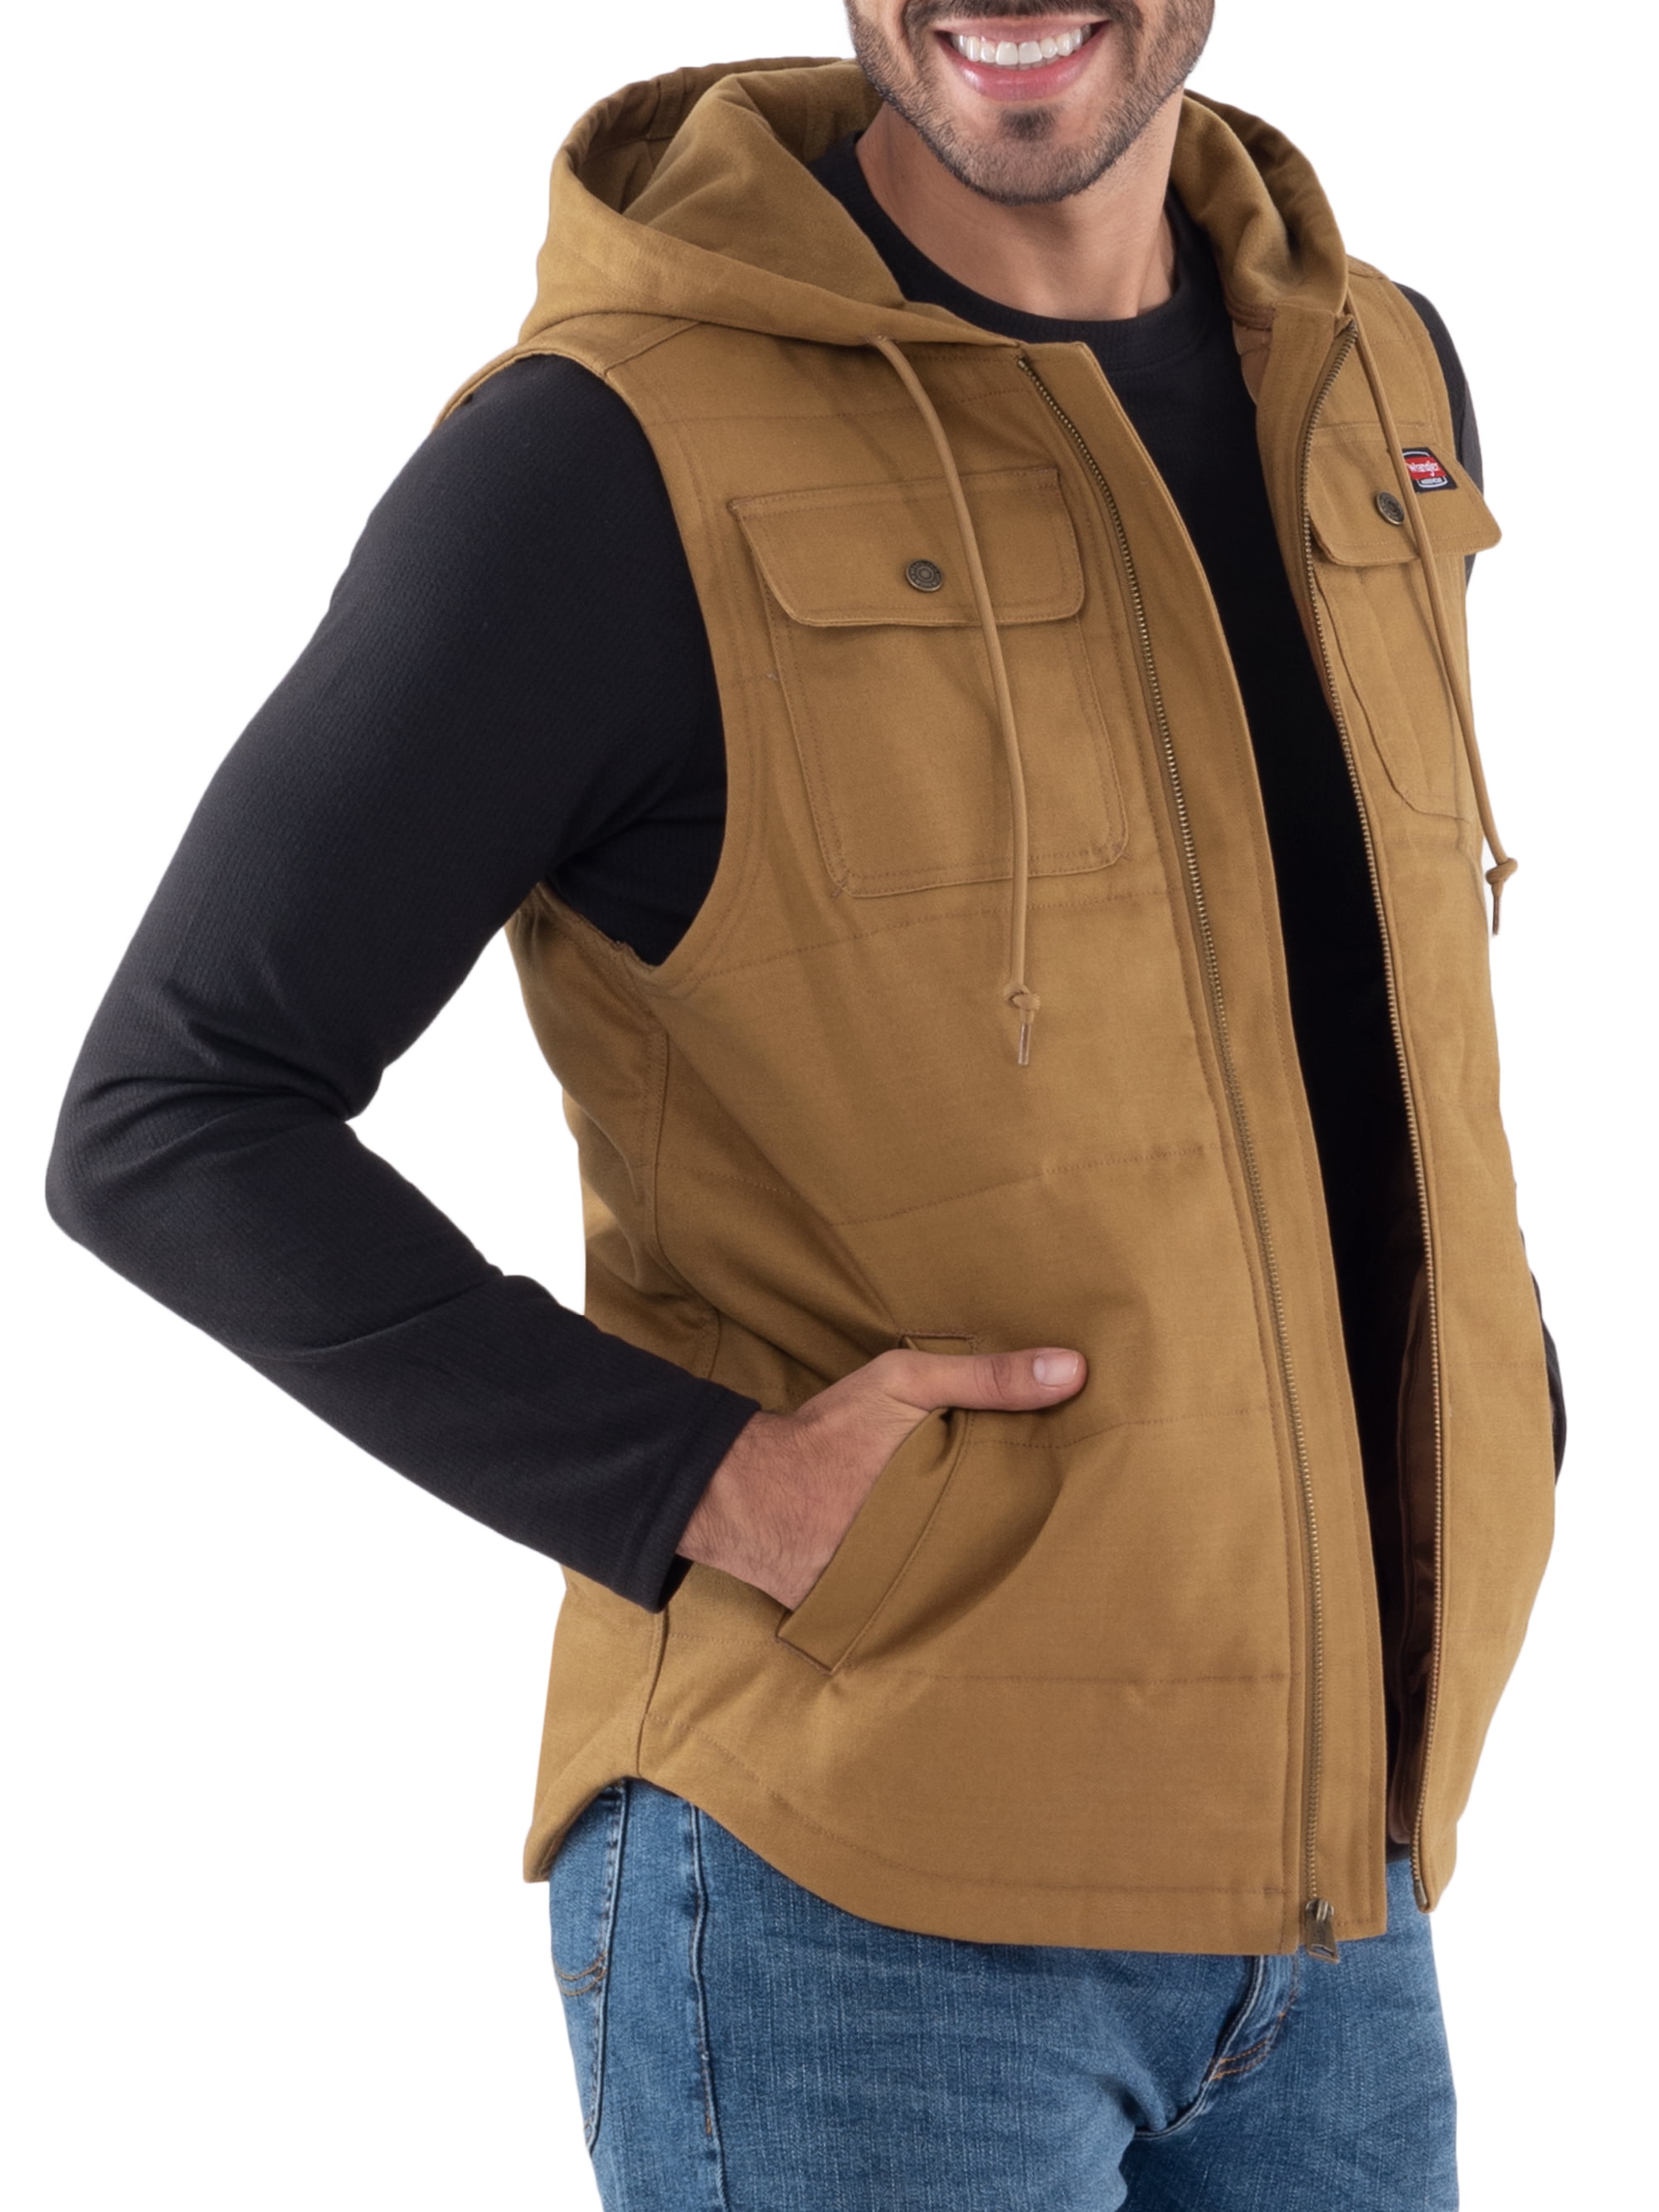 Wrangler Workwear Men's & Big Men's Quilted Lined Duck Vest with Hood,  Sizes S-5XL 